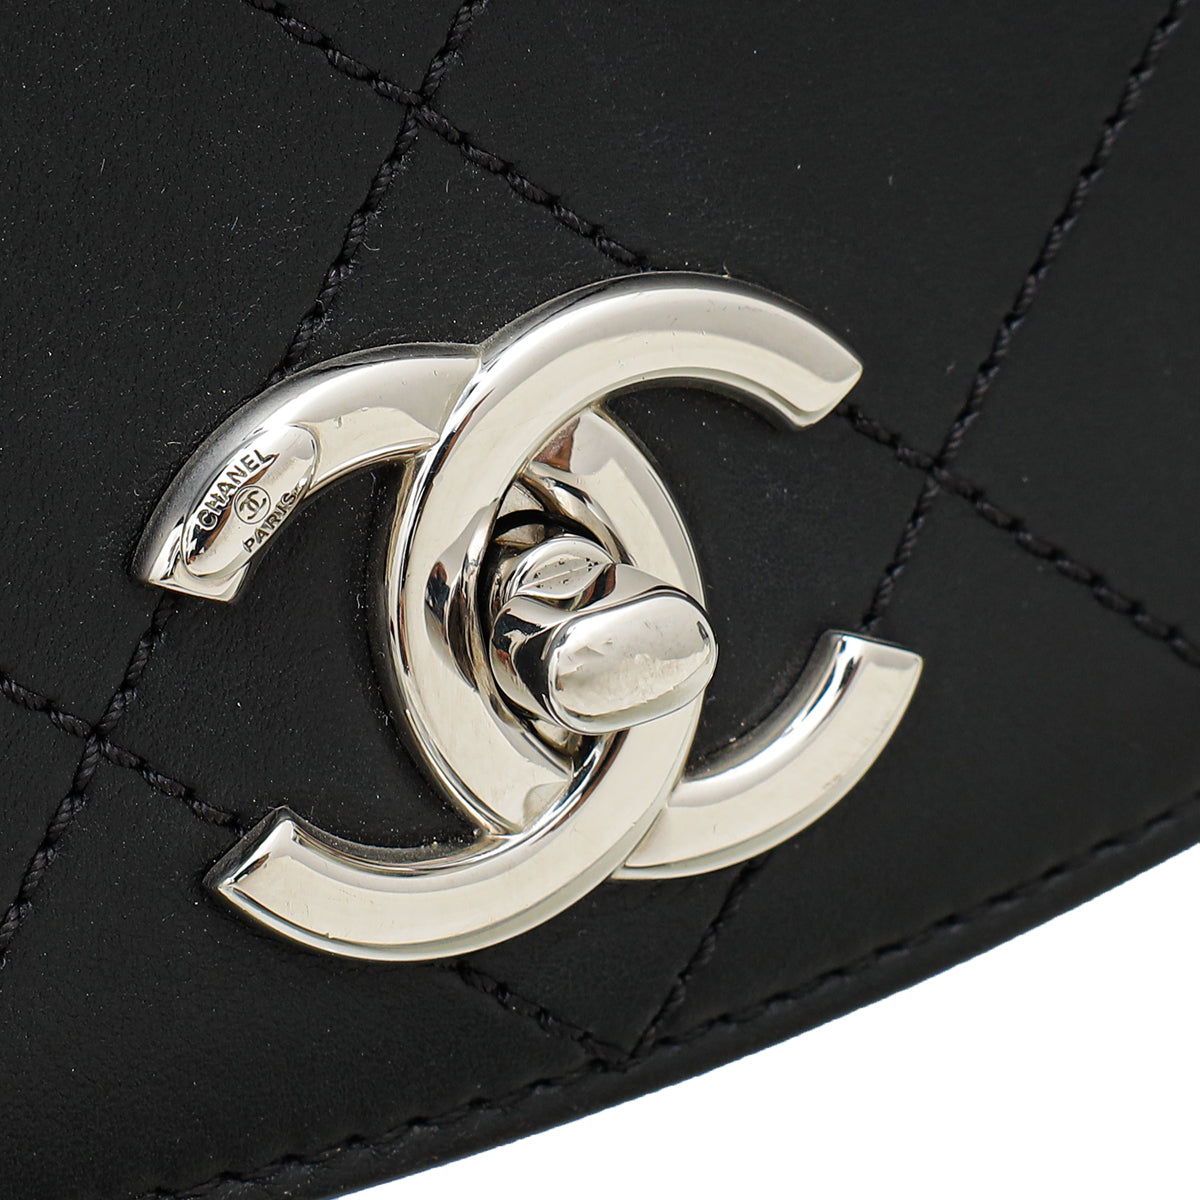 Chanel Black CC Stitched Ring My Bag Flap Small Crossbody Bag